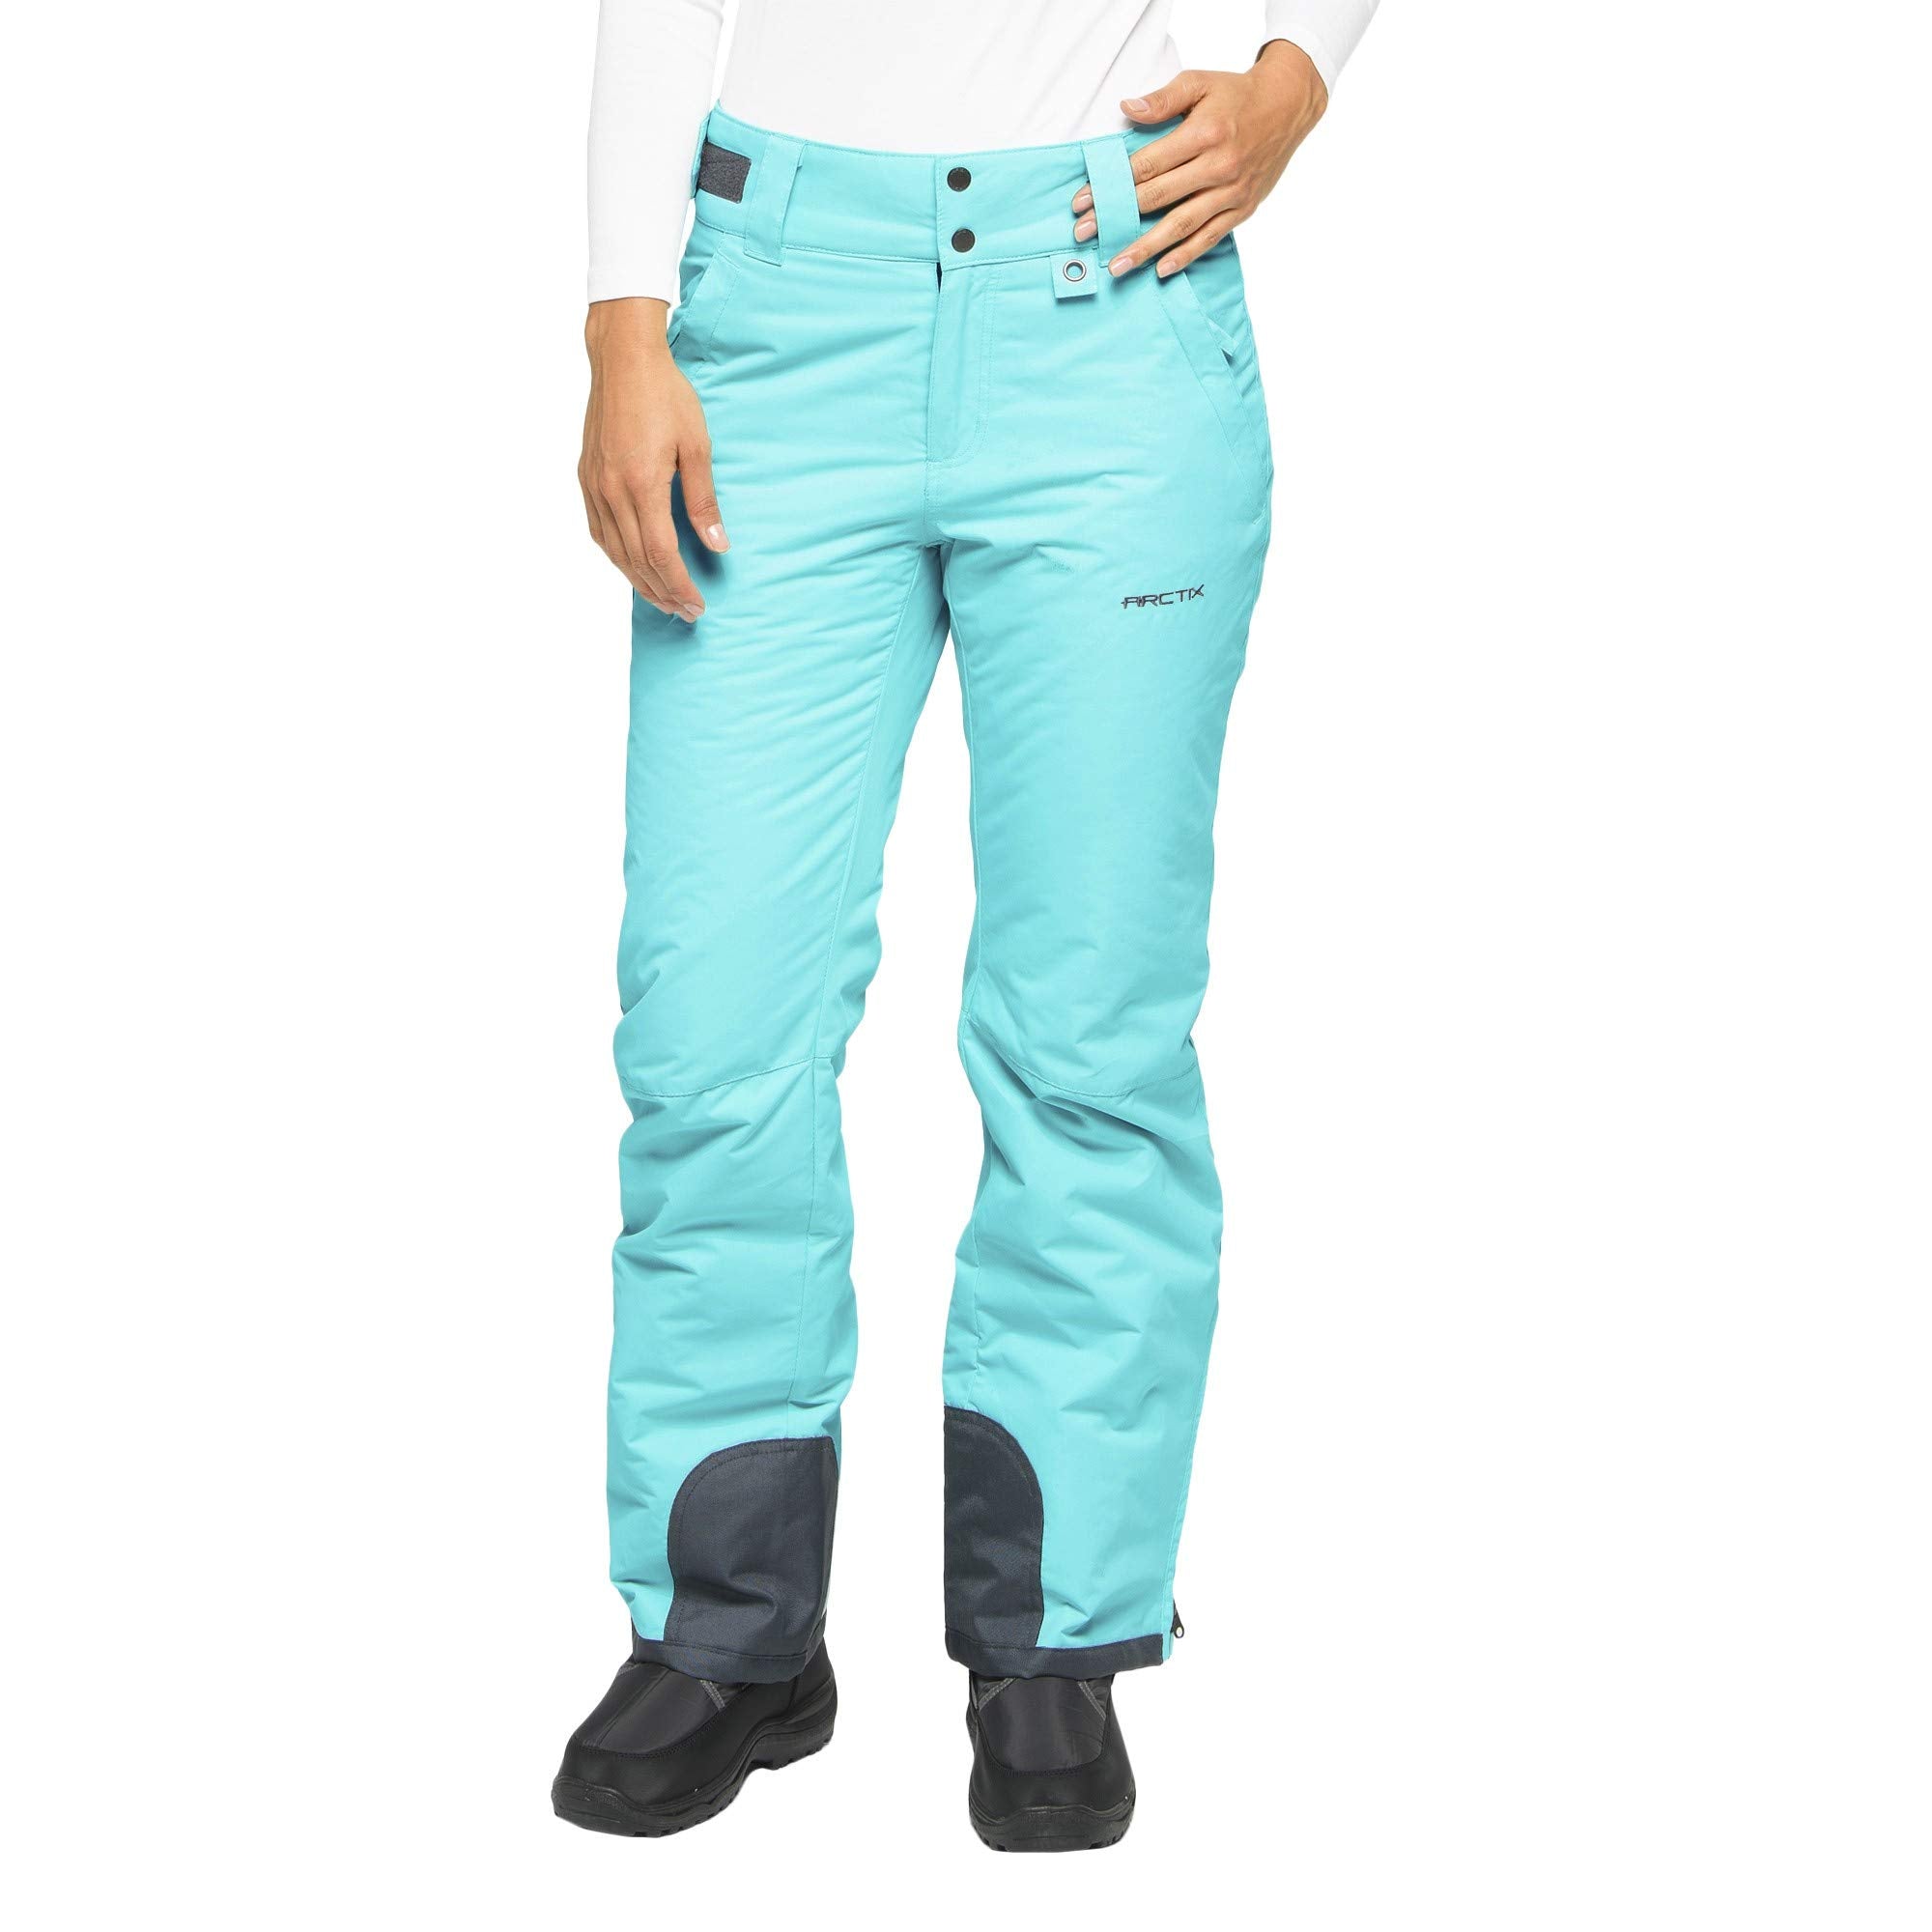 Arctix Women's Snow/Ski Pants, Blue Night, Large